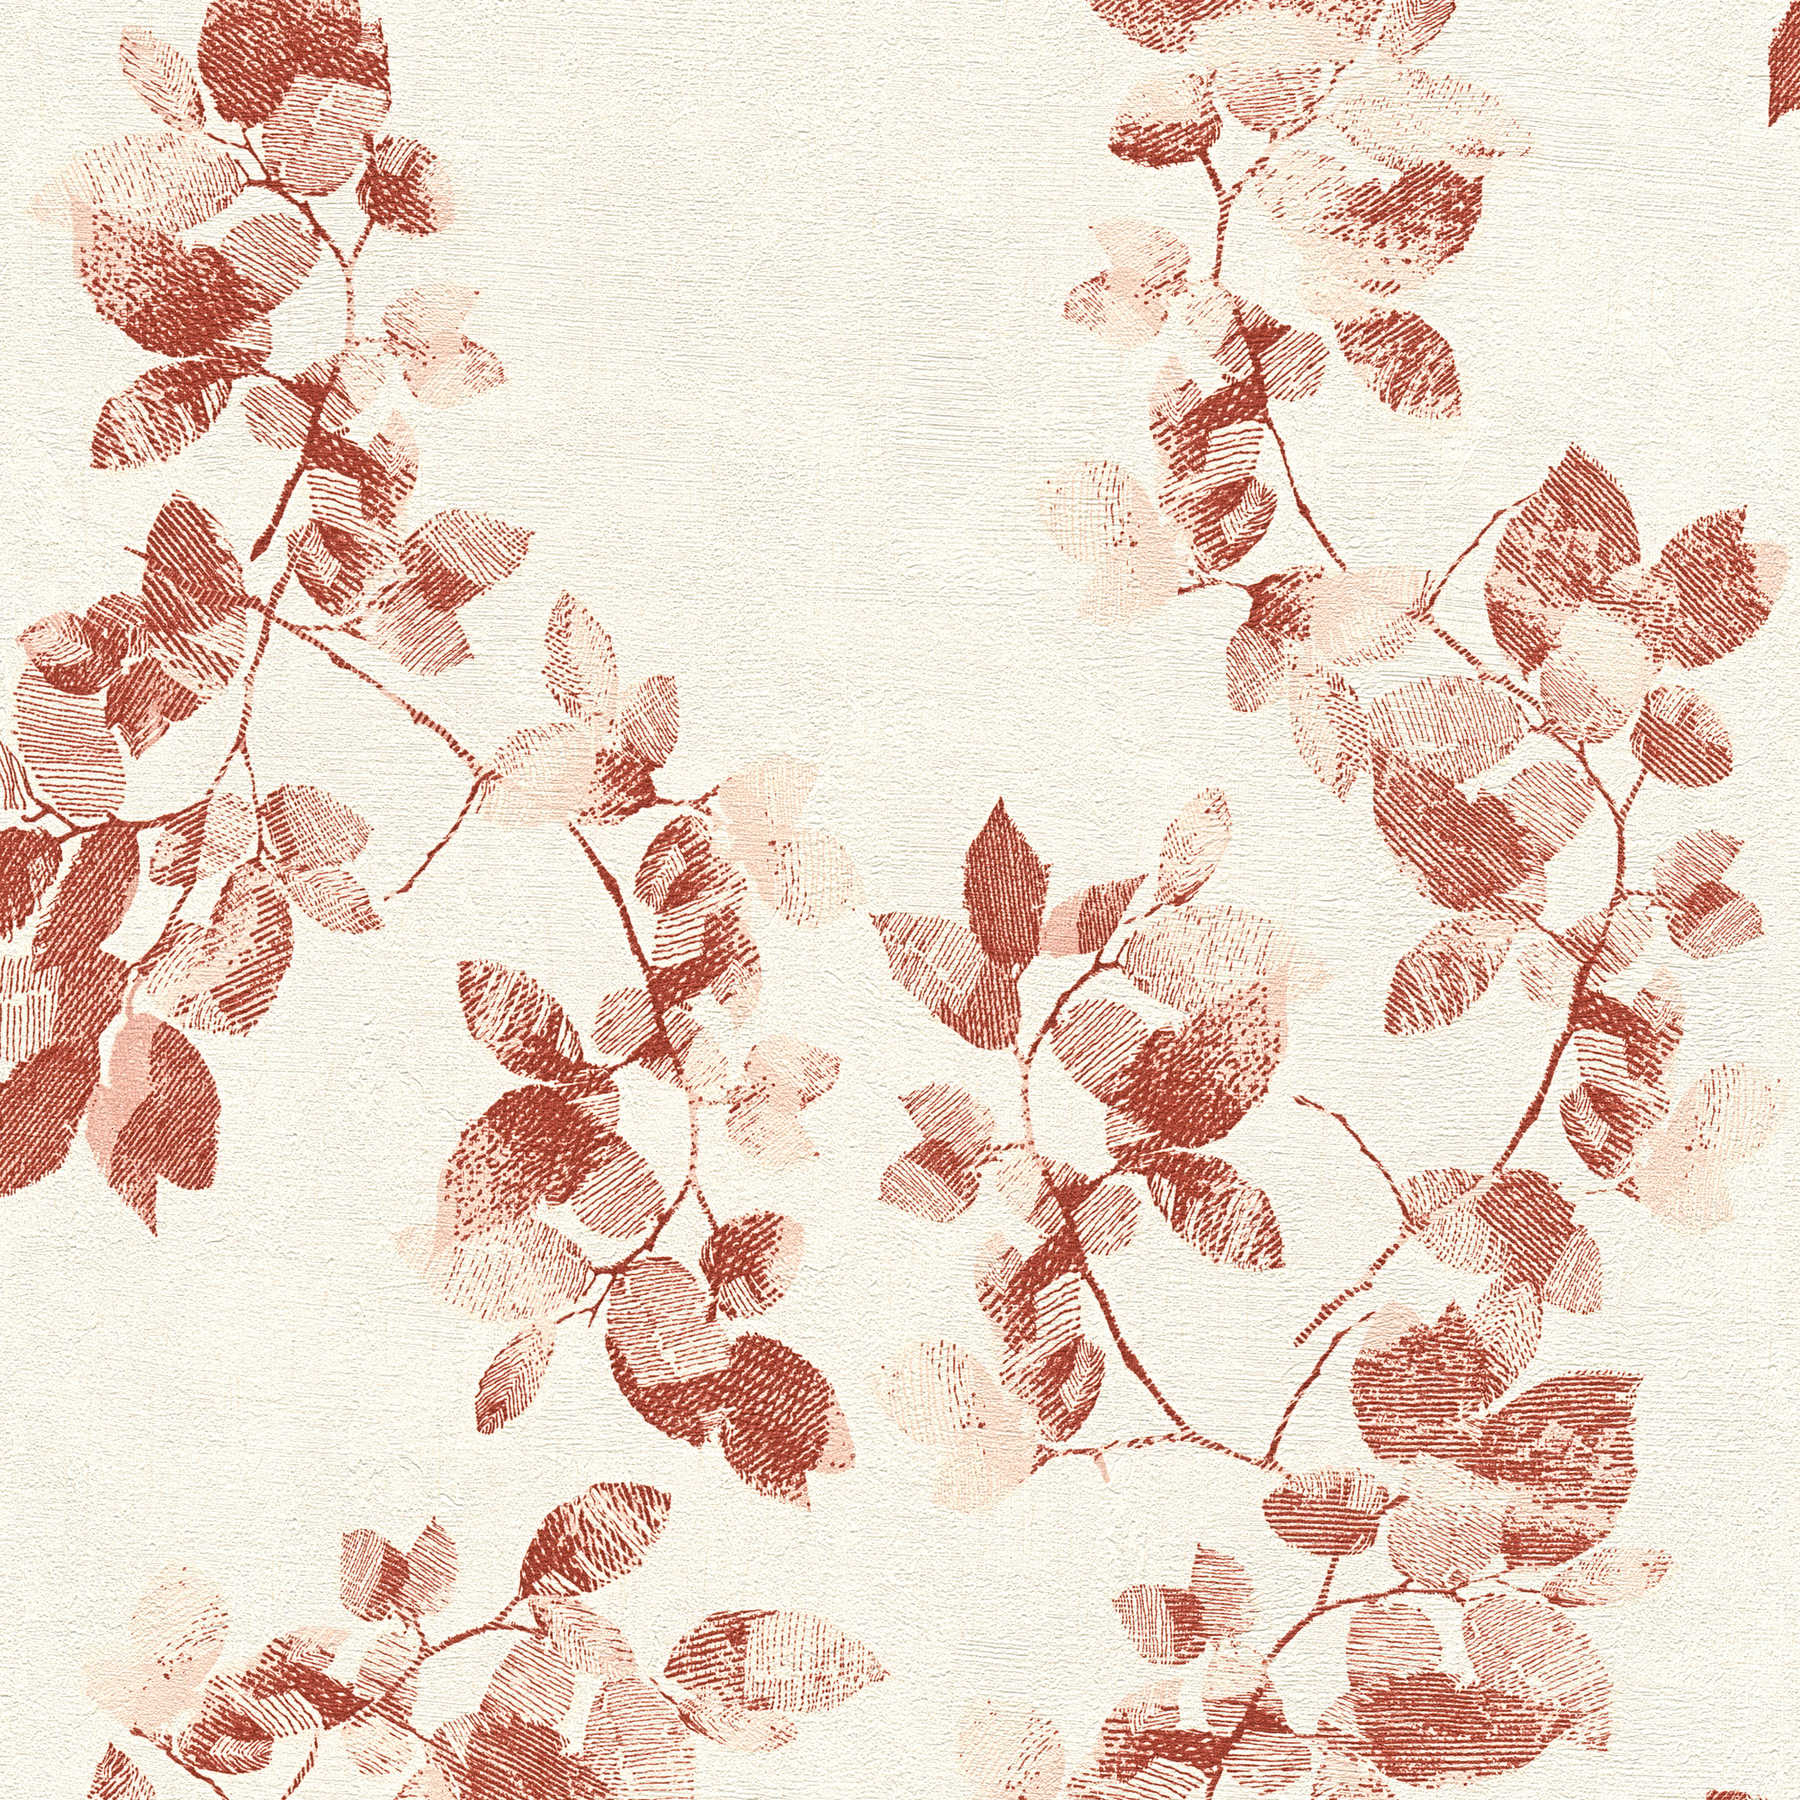         Blätterranken Tapete abstraktes Design – Creme, Rot
    